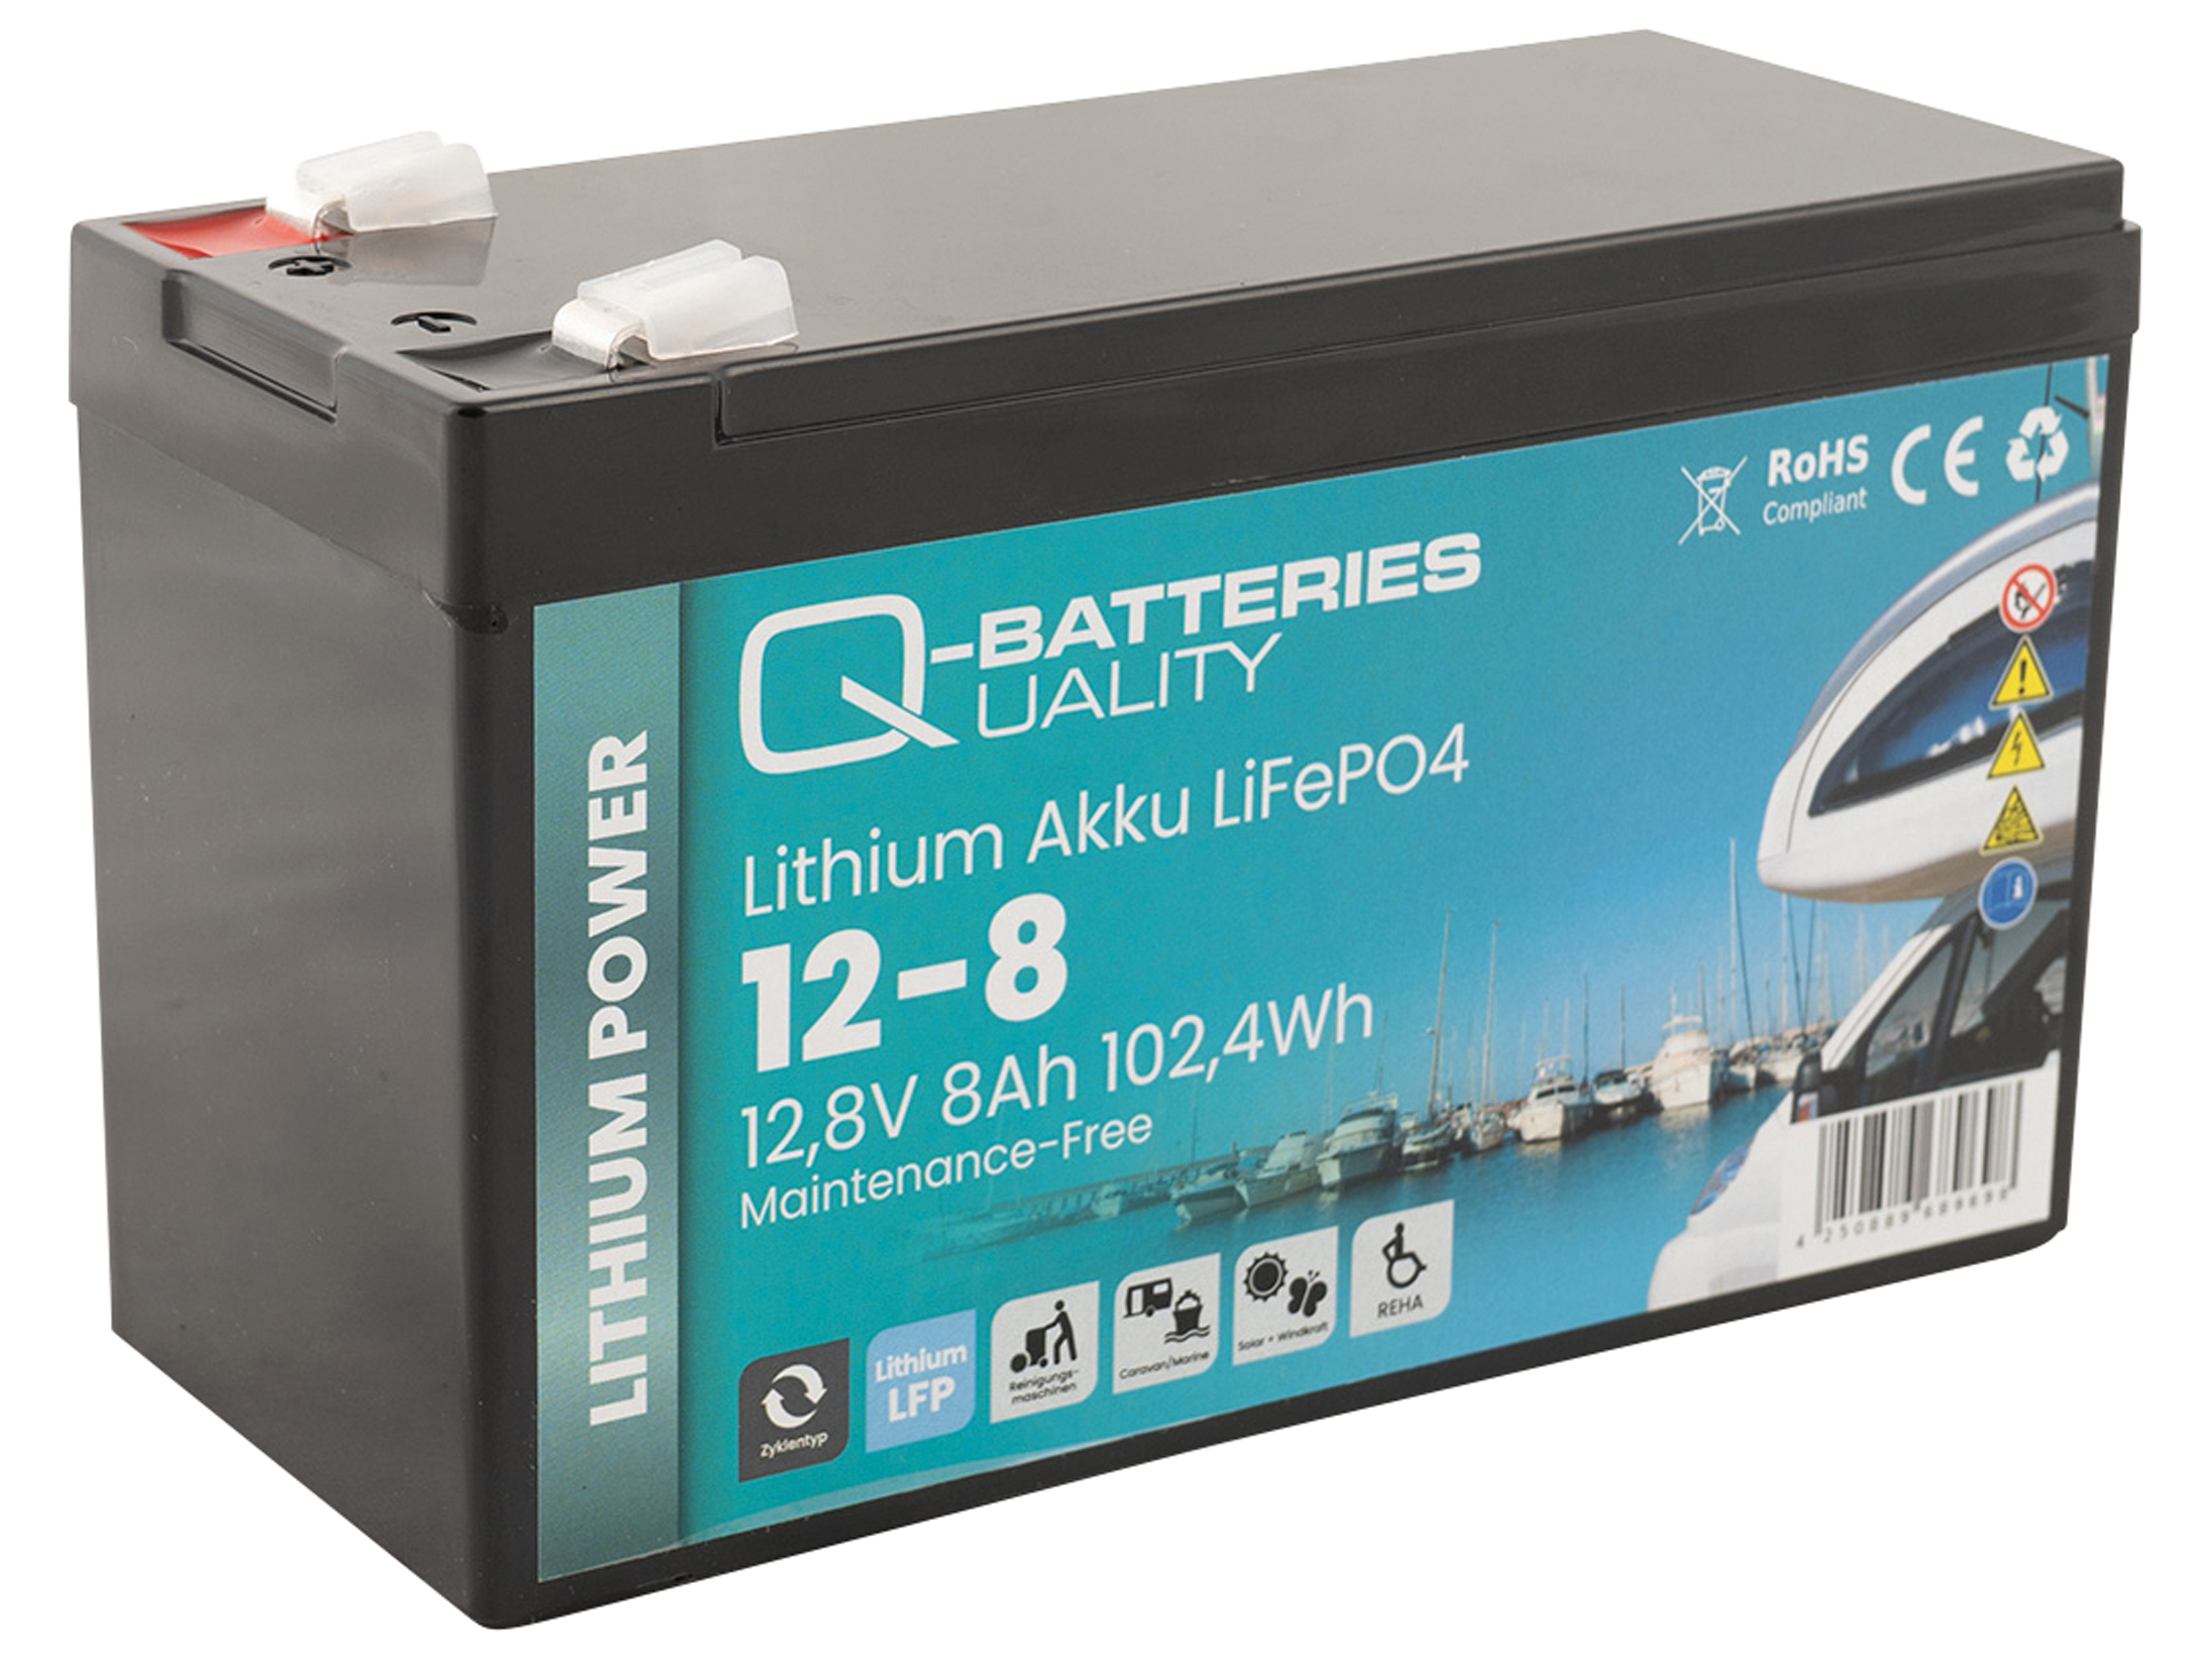 Q-BATTERIES Lithium Akku 12-8 12,8V 8Ah, 102,4Wh LiFePO4 Batterie